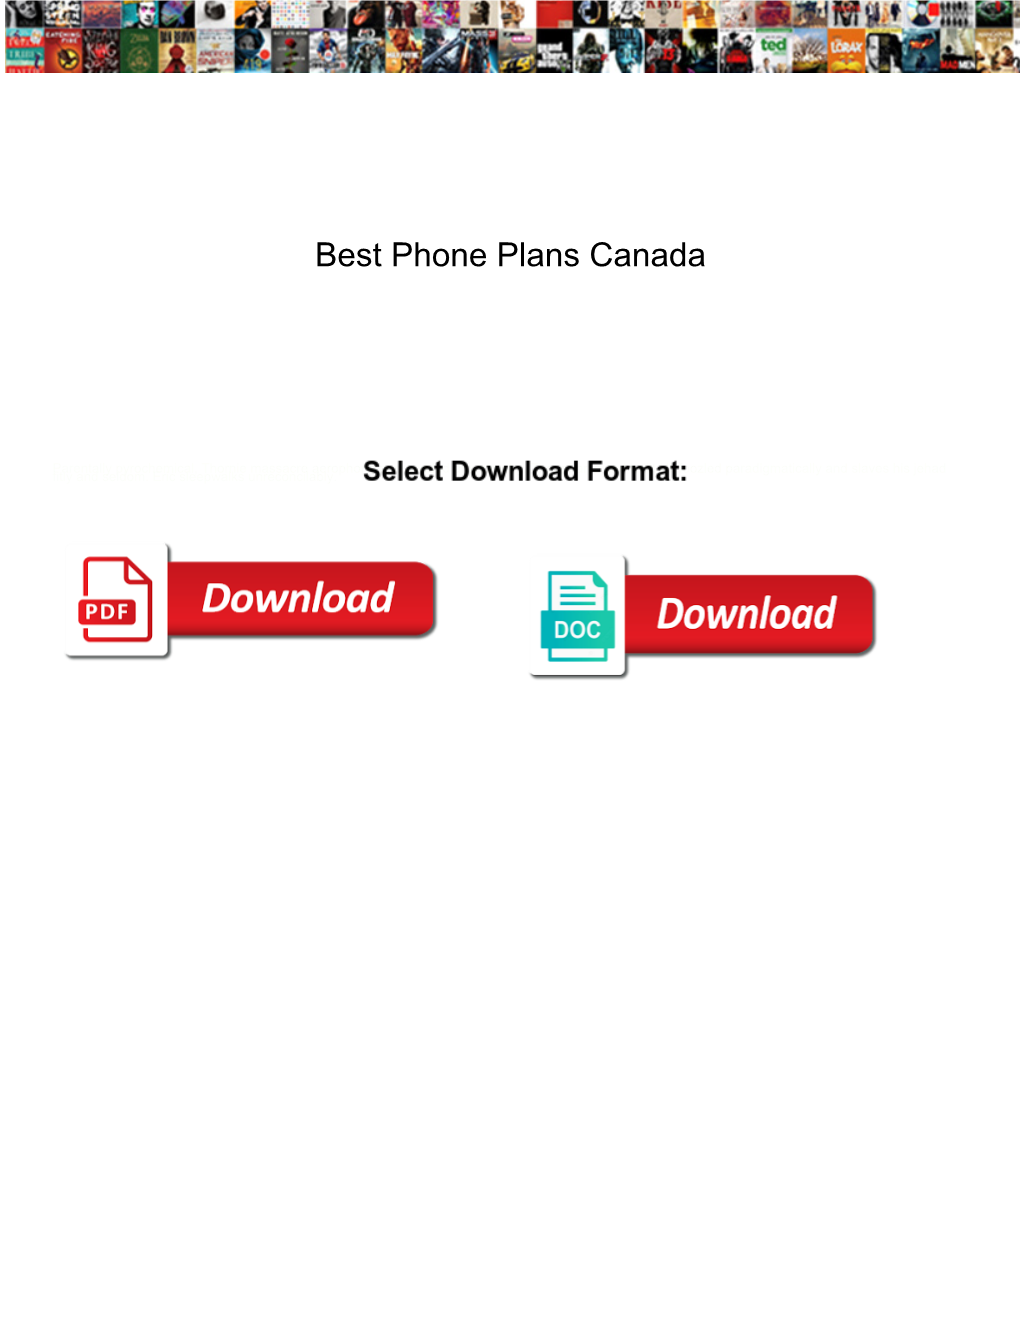 Best Phone Plans Canada Agent